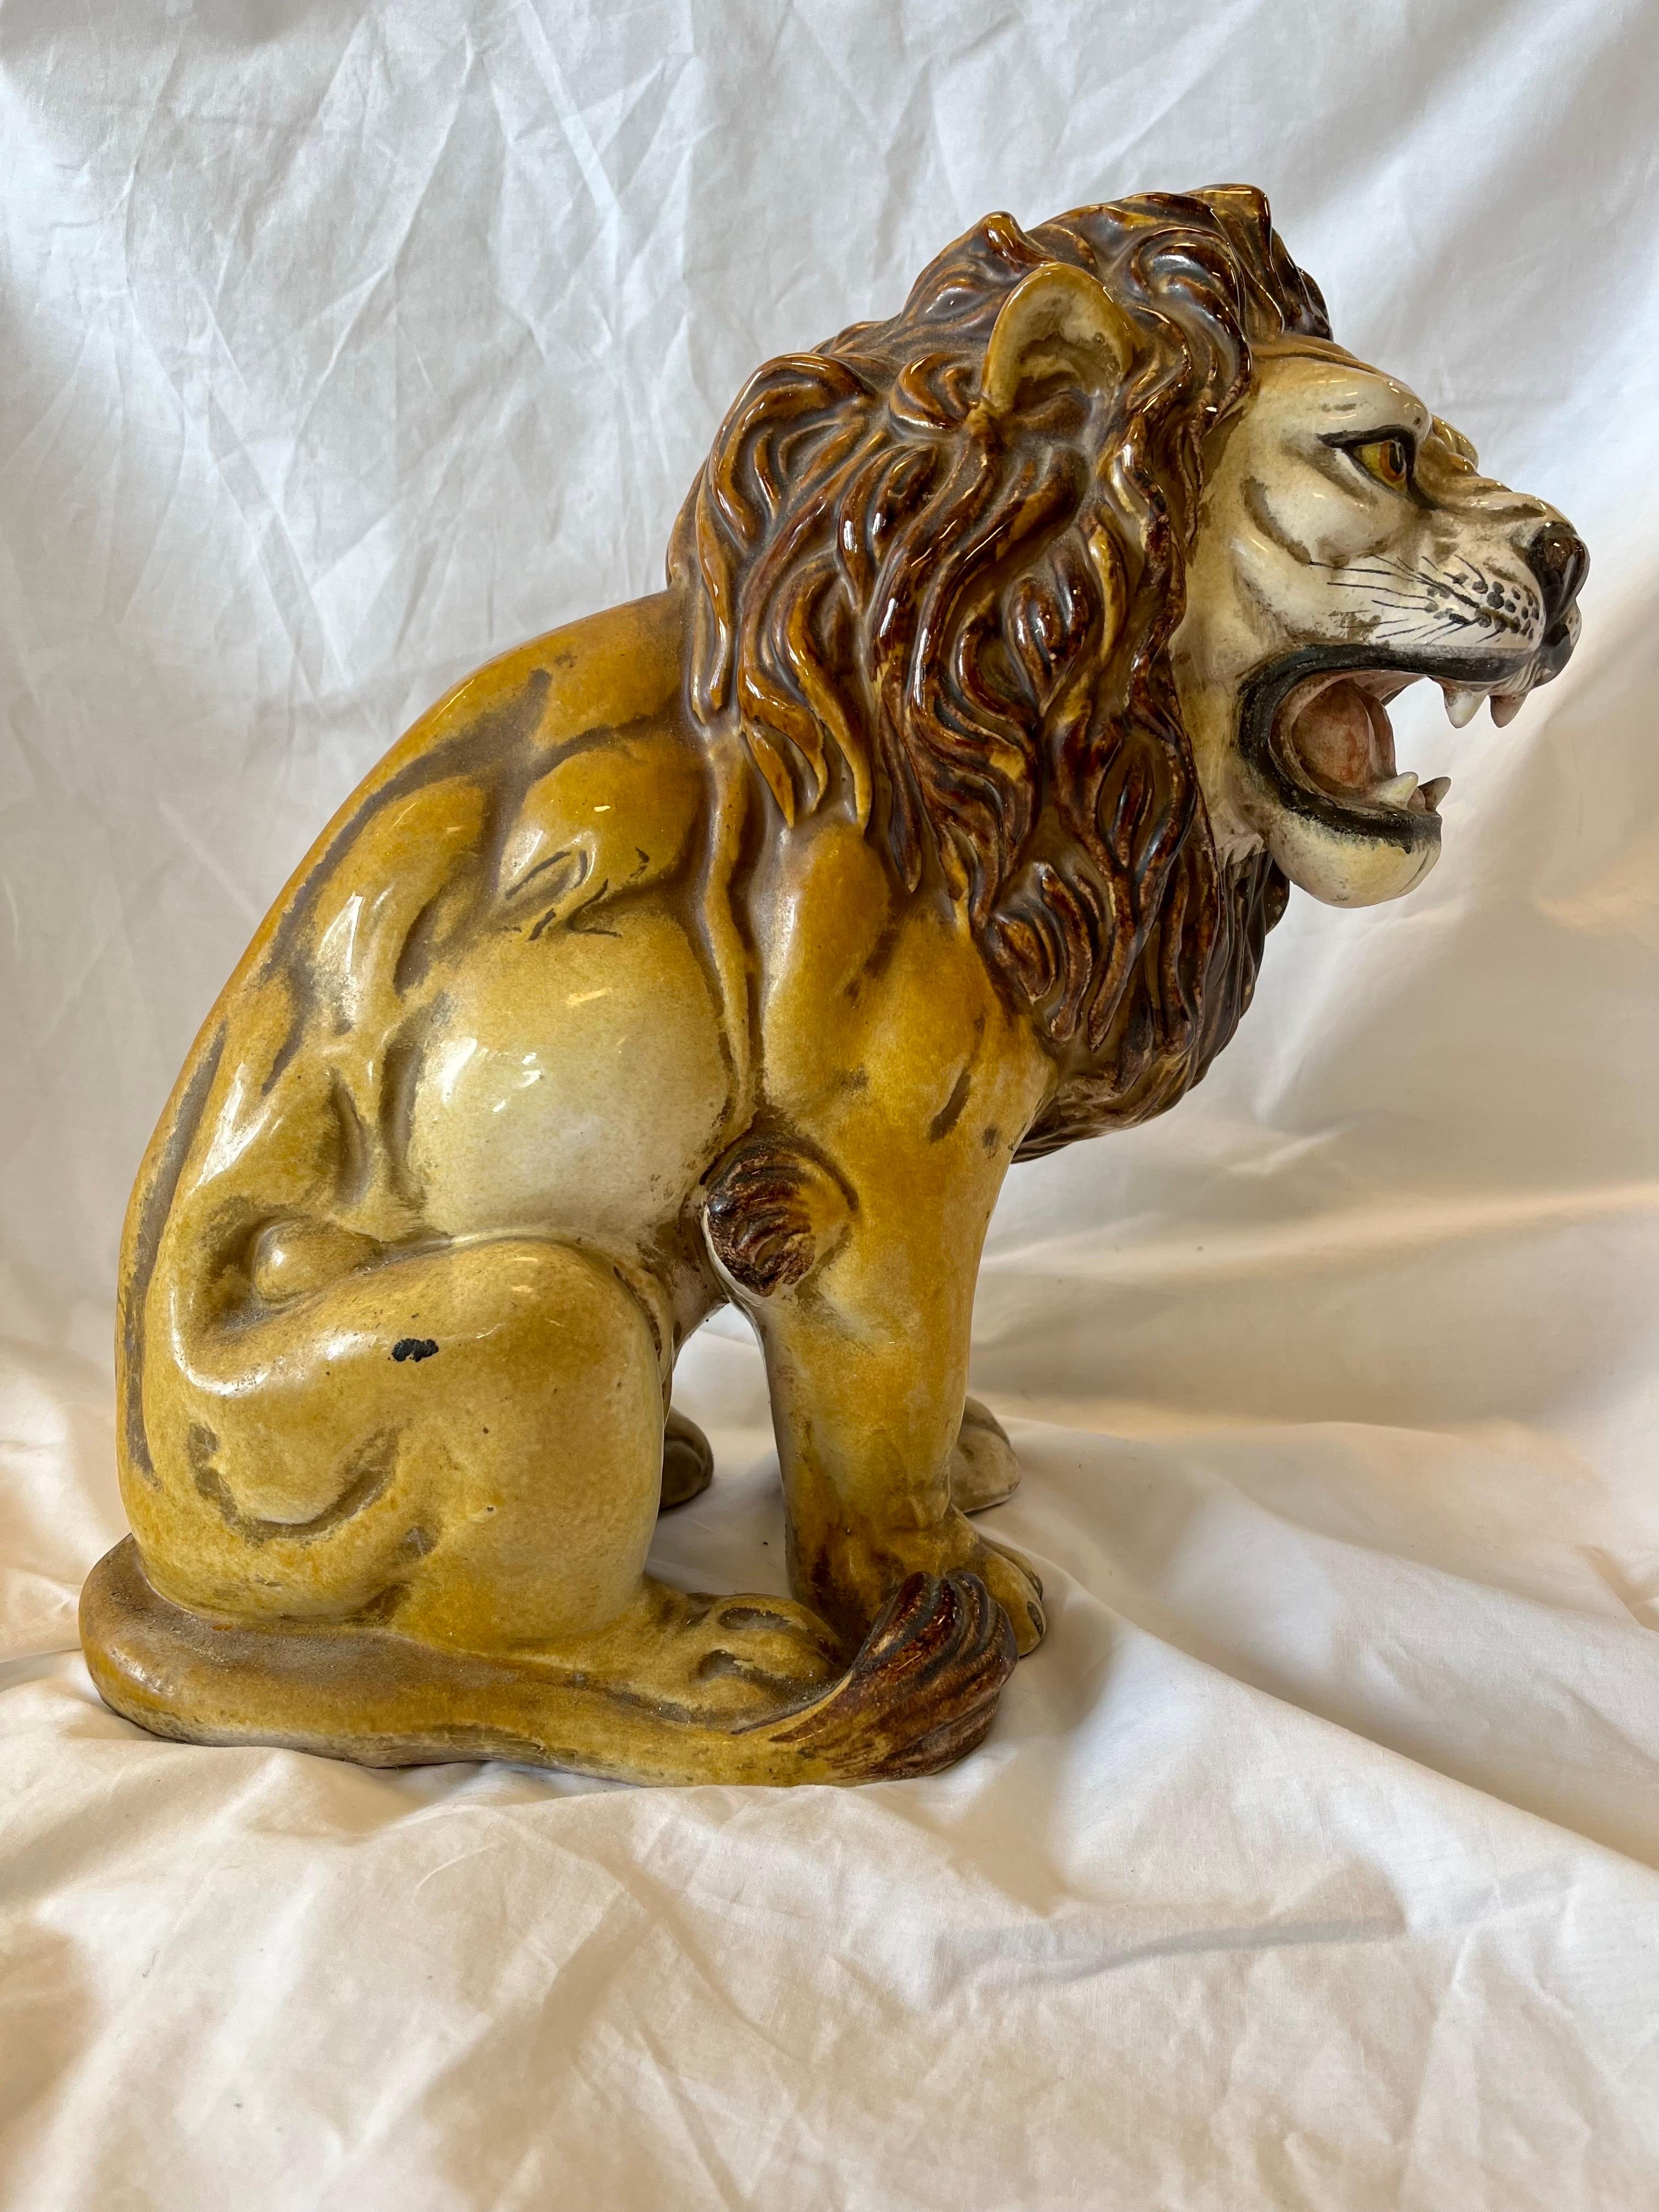 roaring lion statue